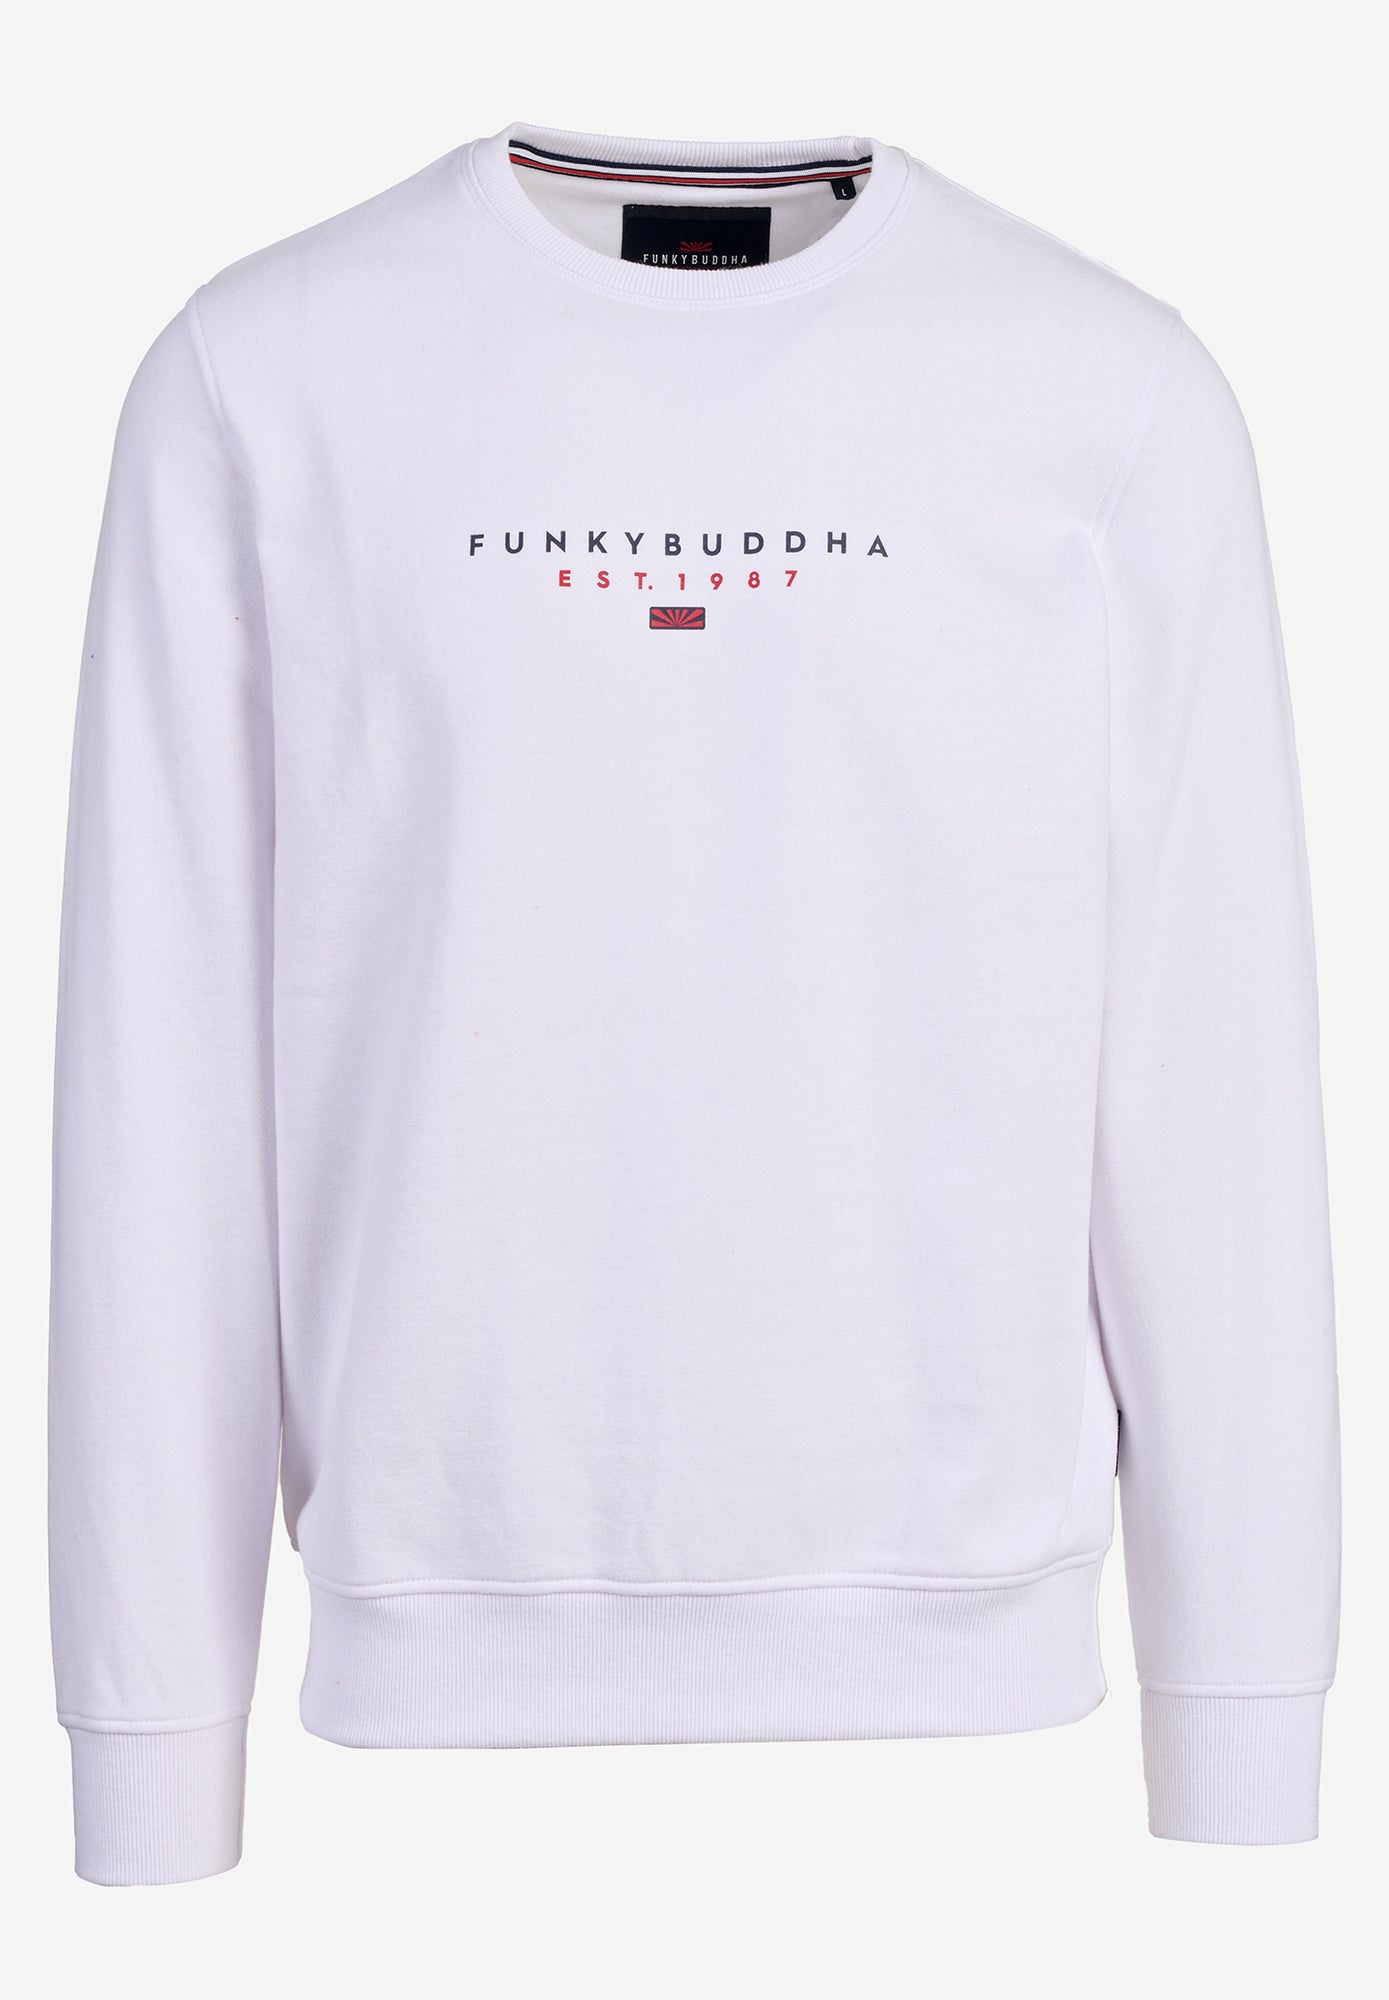 Funky Buddha White Sweatshirt with printed logo